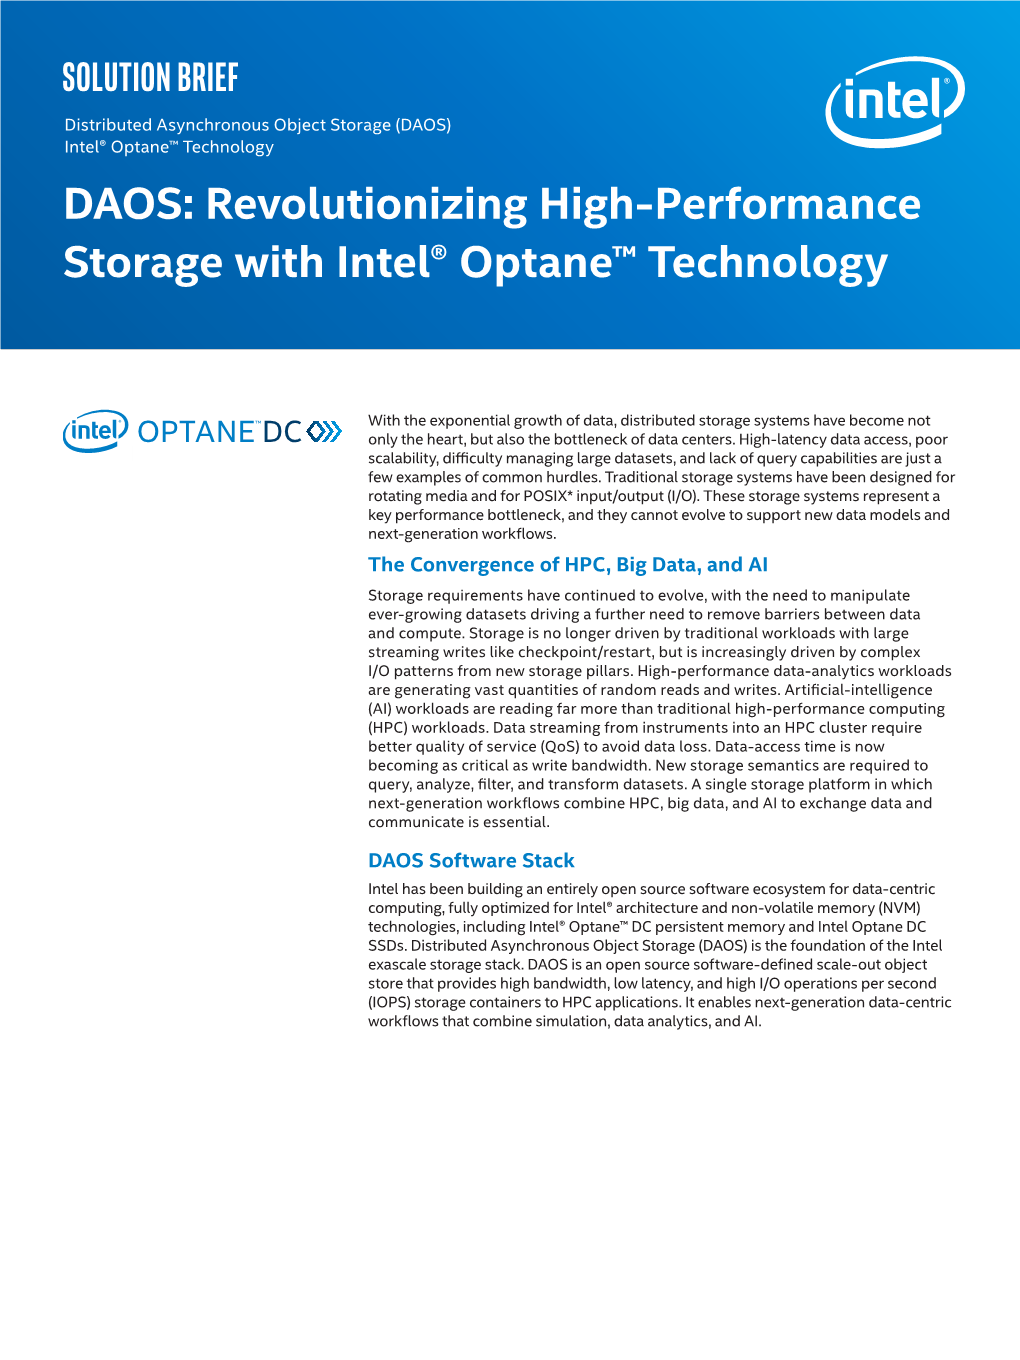 DAOS: Revolutionizing High-Performance Storage with Intel® Optane™ Technology